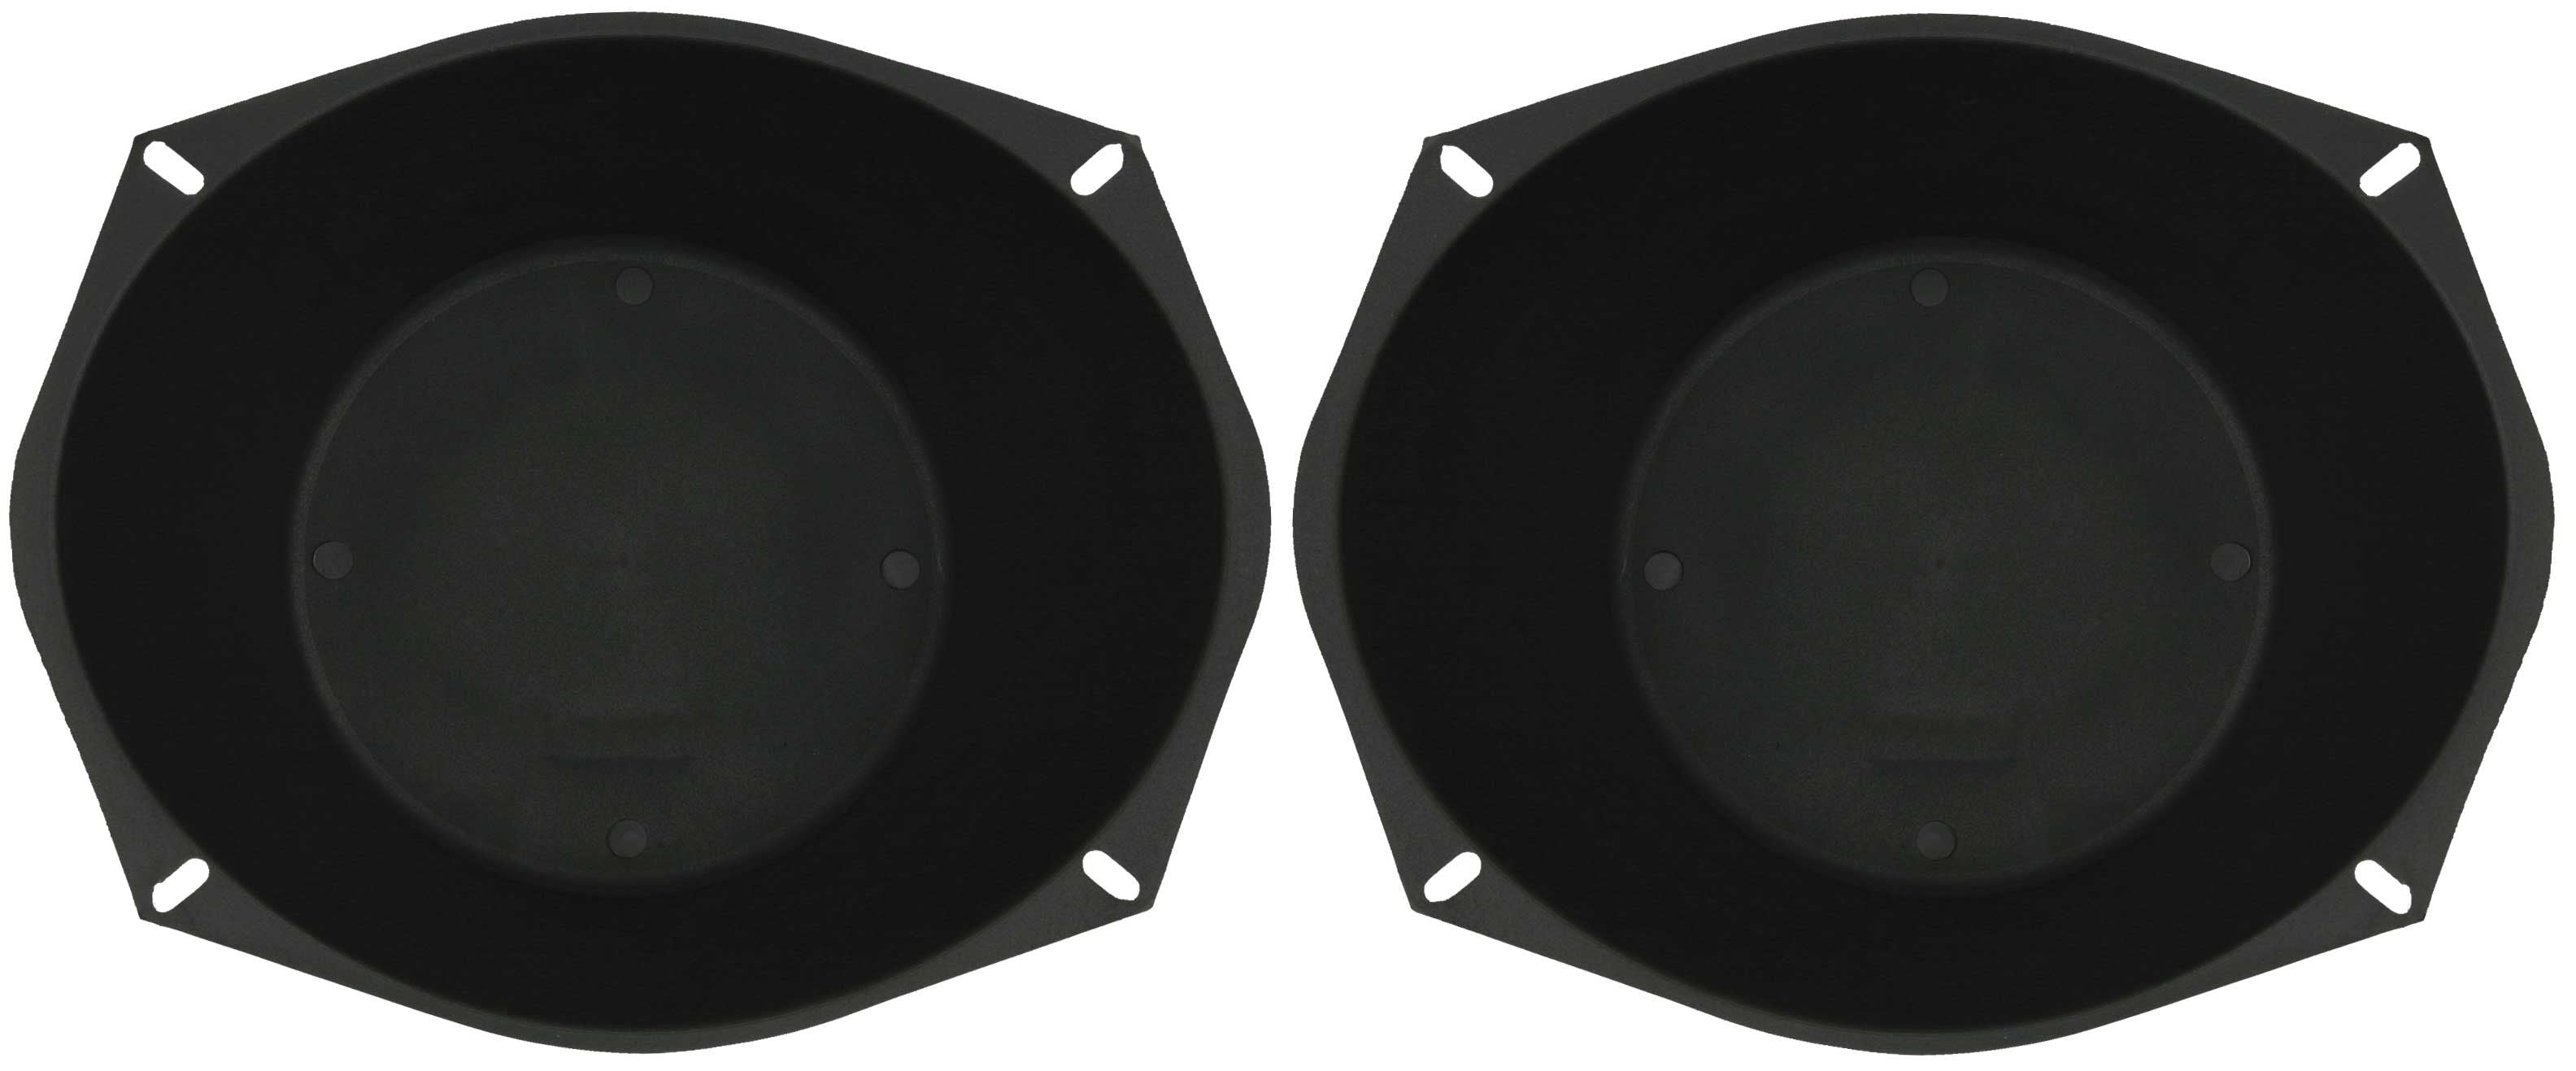 Metra 81-6900 - Universal Speaker Baffle 6 X 9 inch